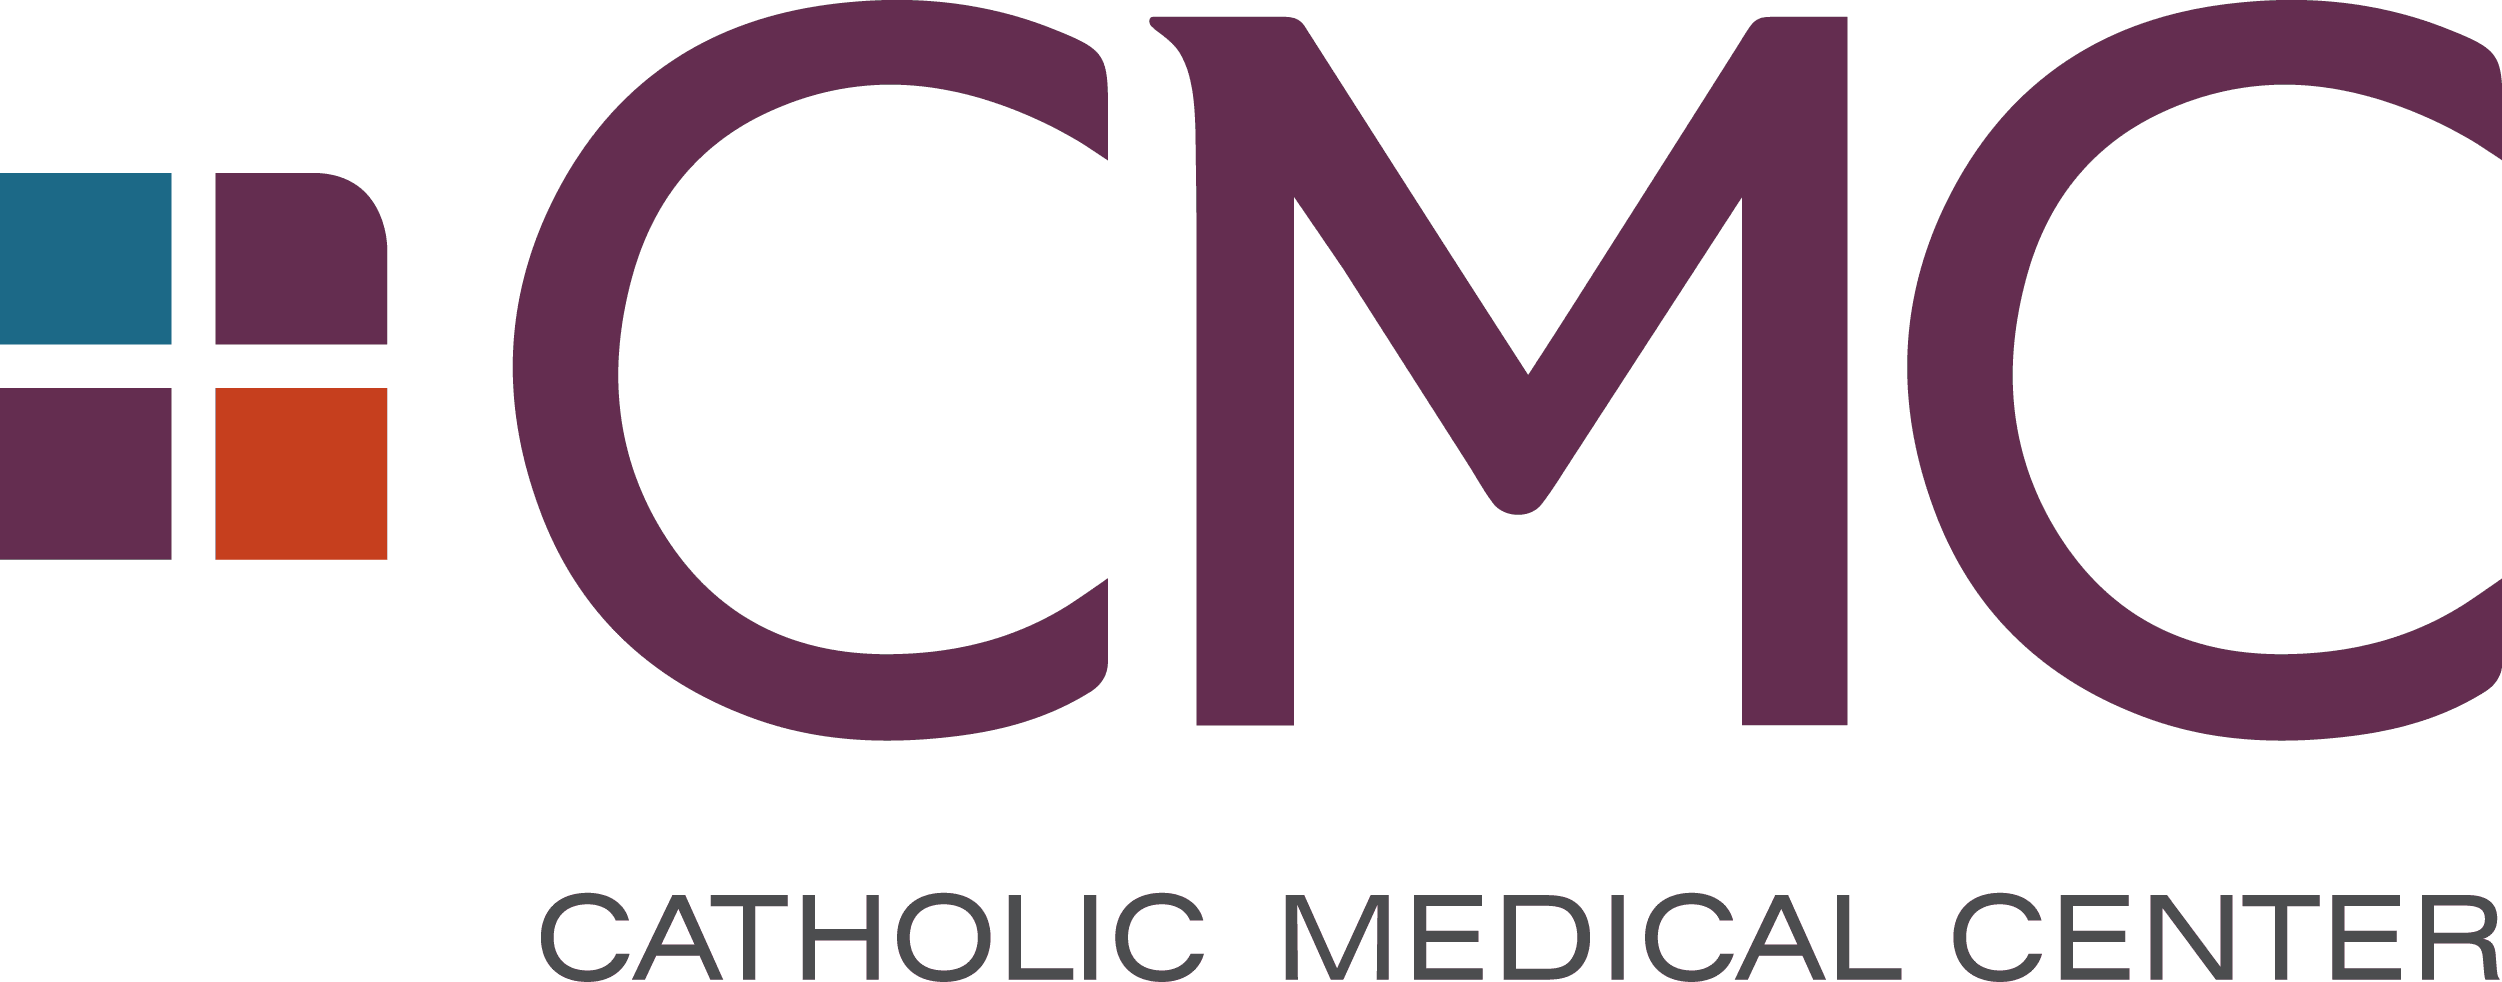 Catholic Medical Center Exploring Merger with HCA Healthcare